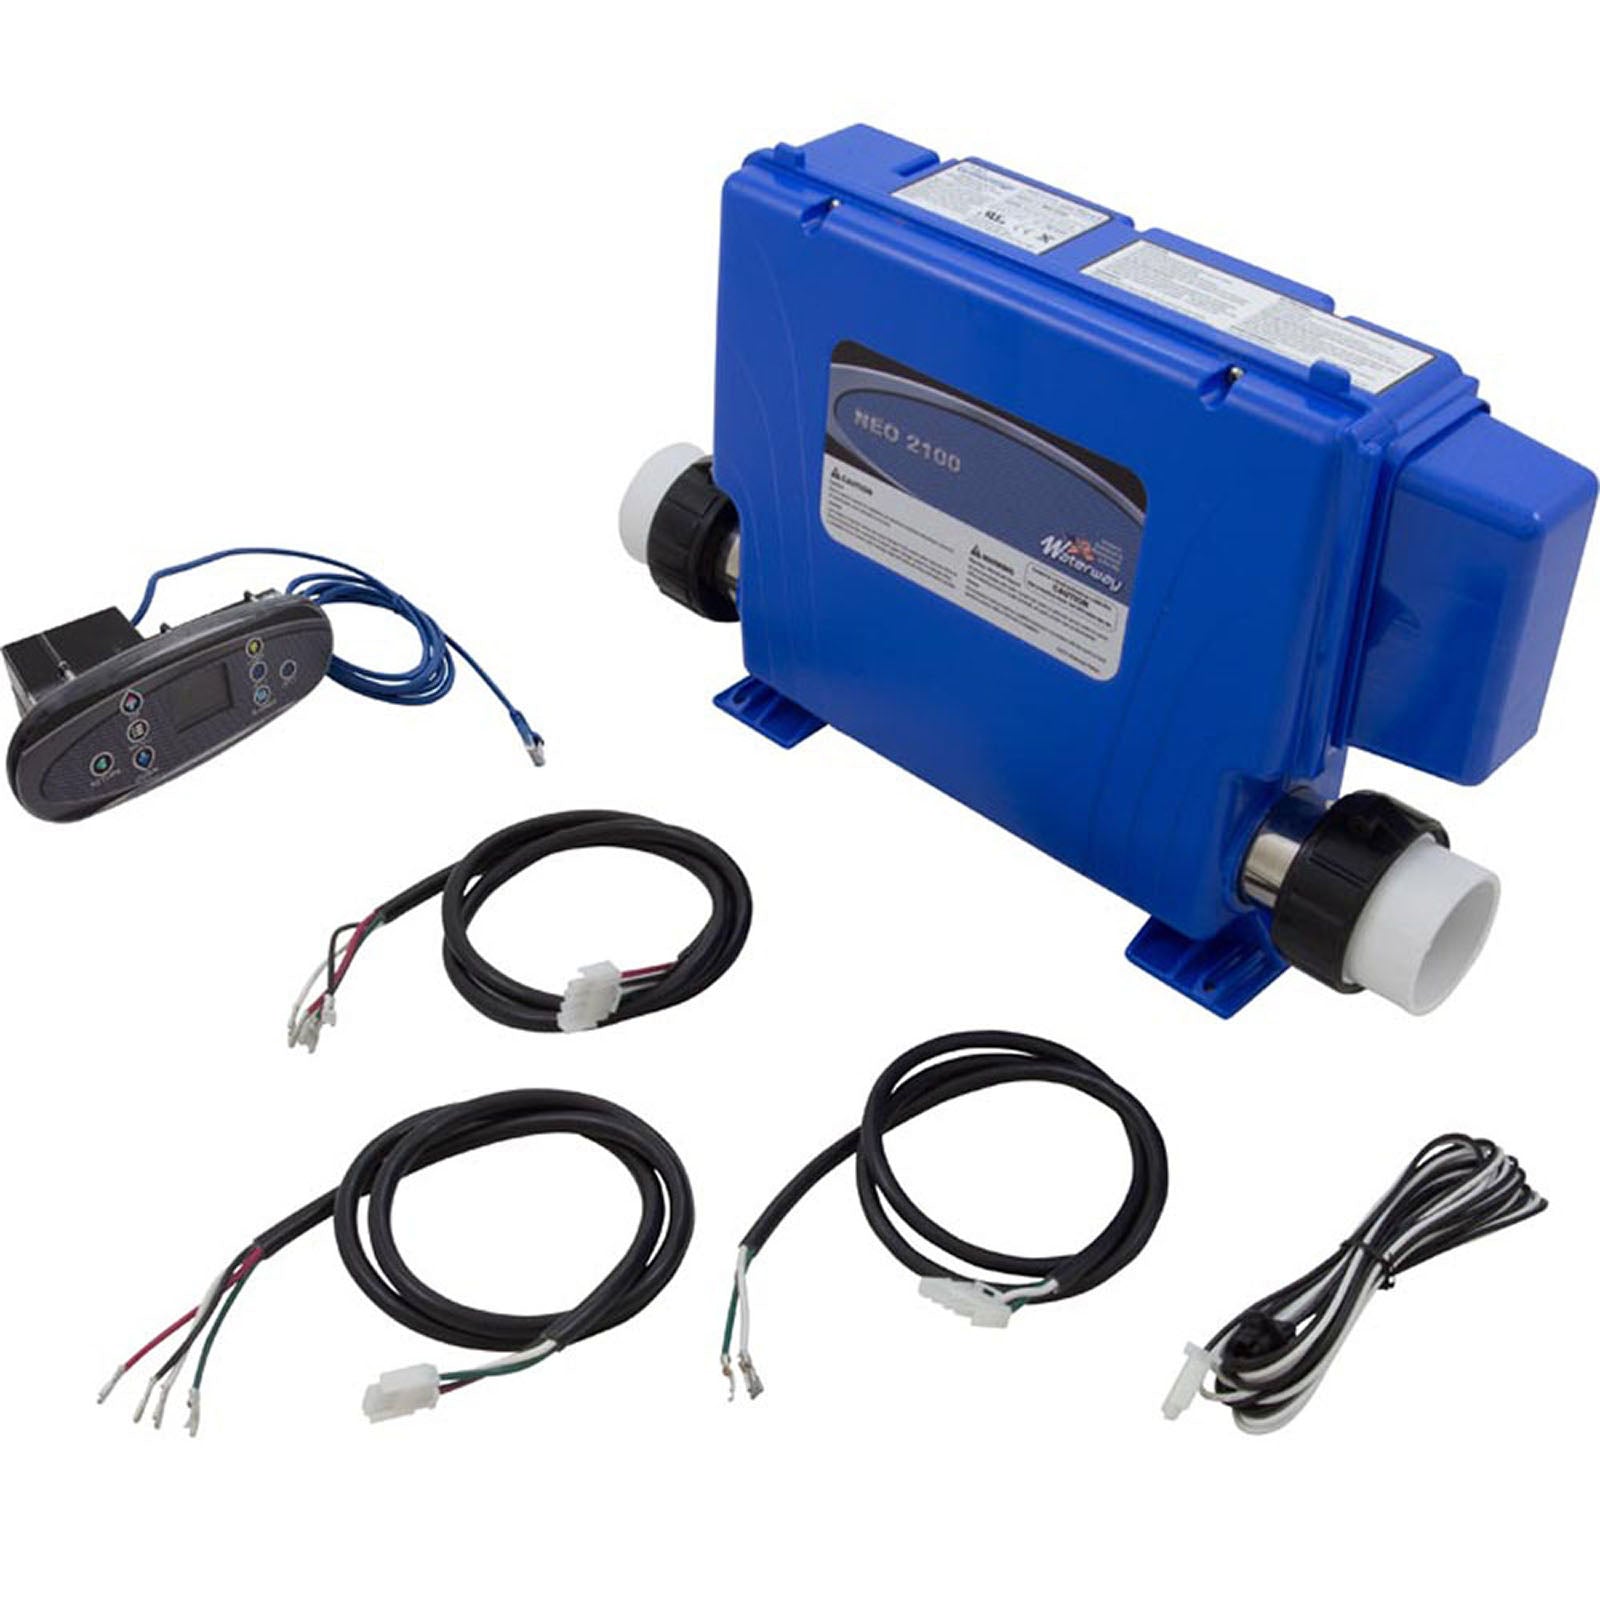 NEO 2100 Control Kit, 2-2Spd Pumps, Blower, O3, AV 5.5Kw Heater W/ NEO 2100 Panel 